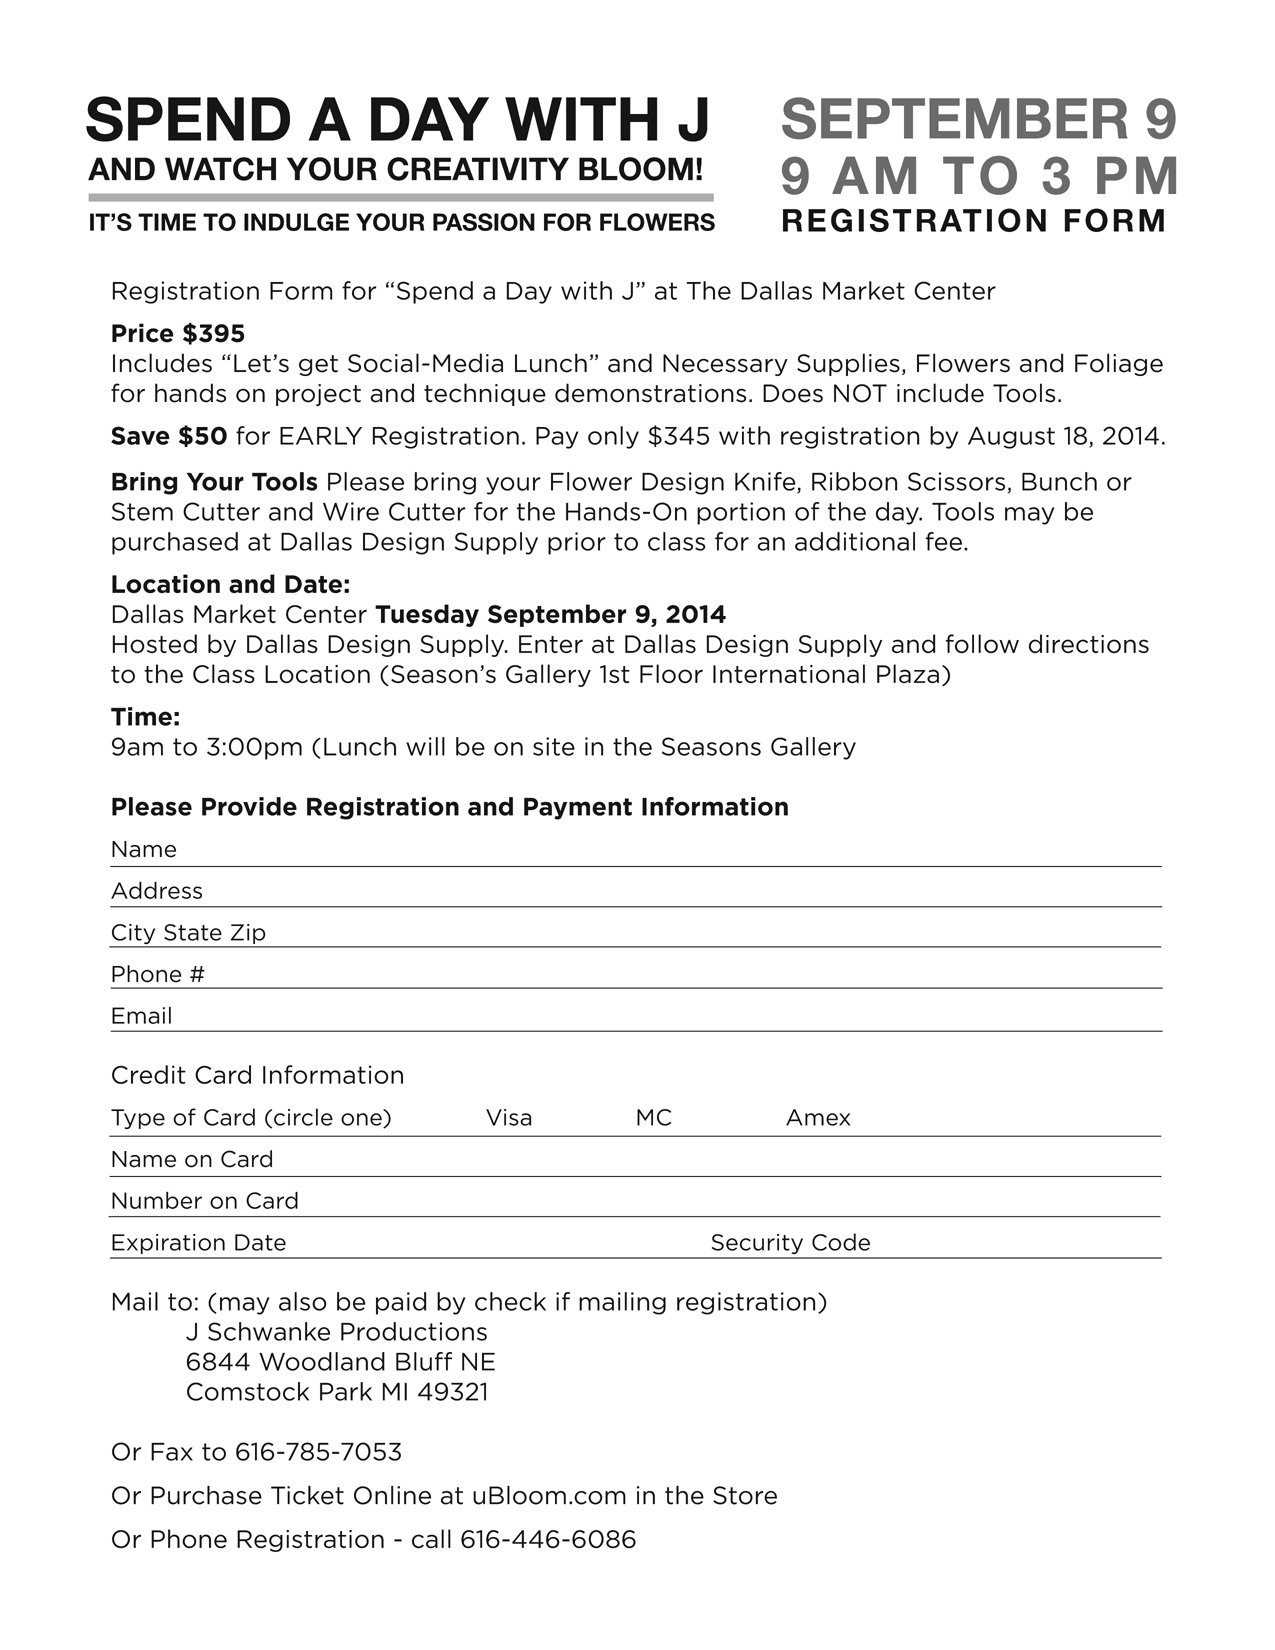 Registration Form for "Day with J" Dallas - September 9, 2014